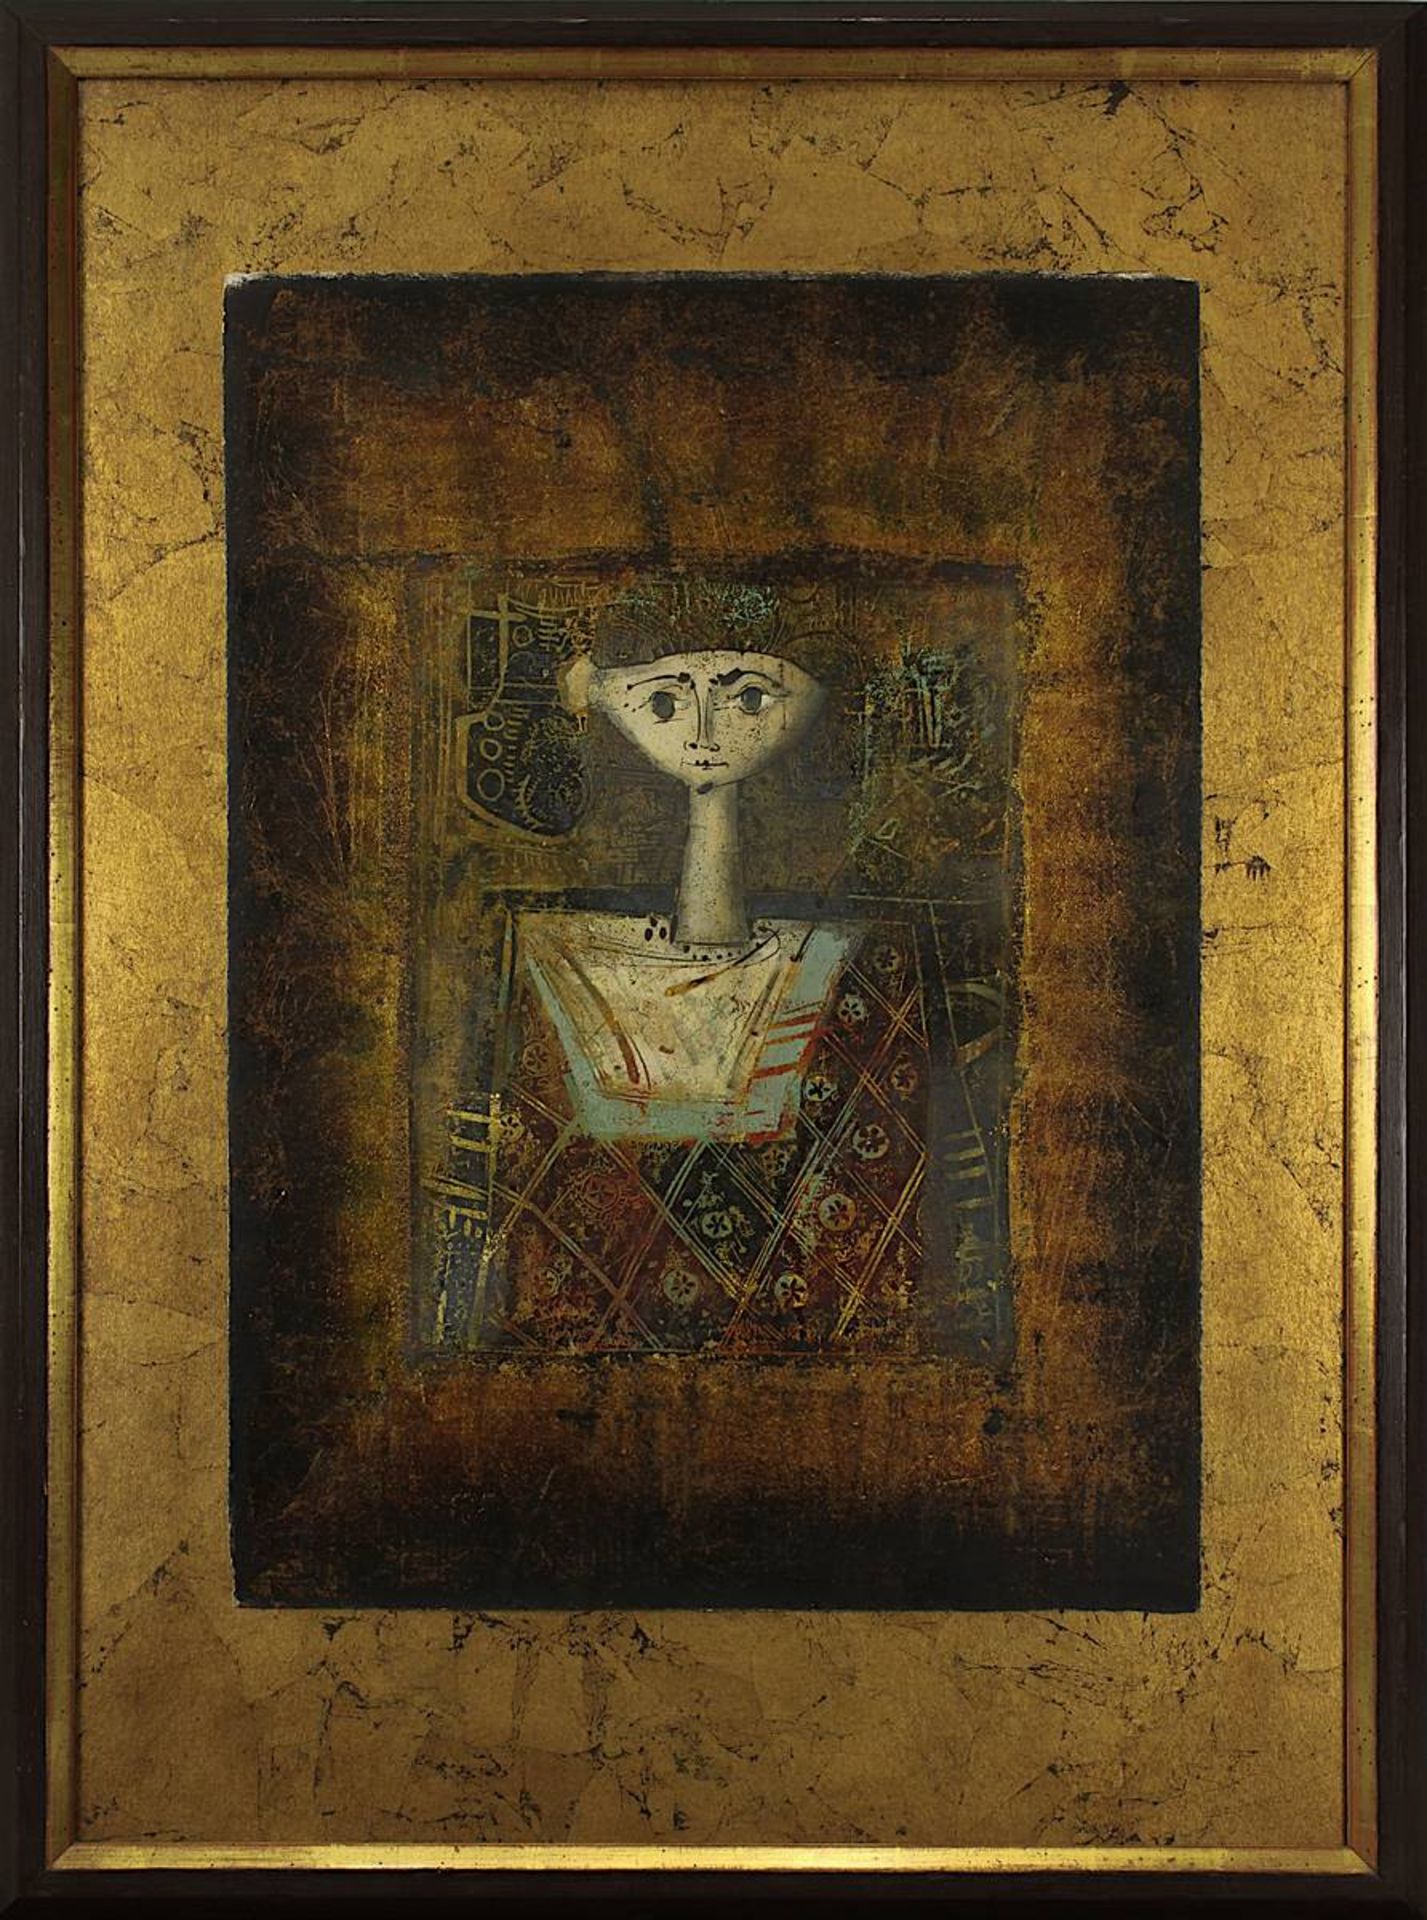 Berber, Mersad (Bosanski Petrovac 1940 - 2012 Zagreb), Frauenporträt, Mischtechnik mit Goldfolie, im